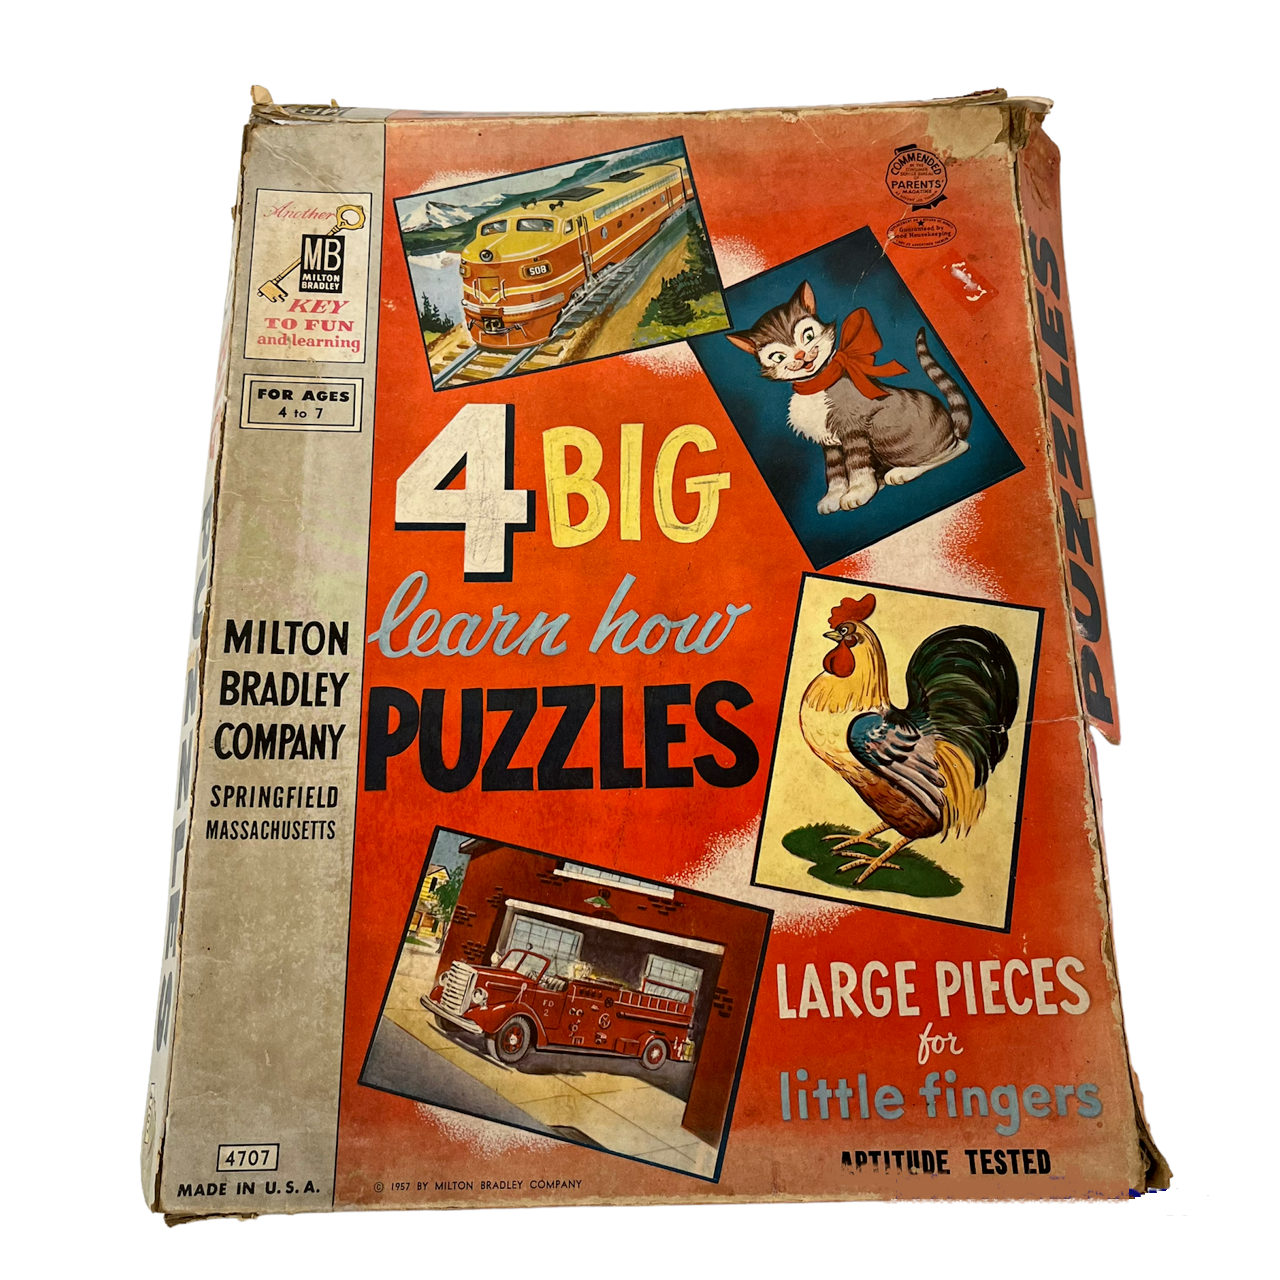 Four 4 Big Learn How Puzzles Large Pieces By Milton Bradley #4707 Vintage 1957 - $15.16